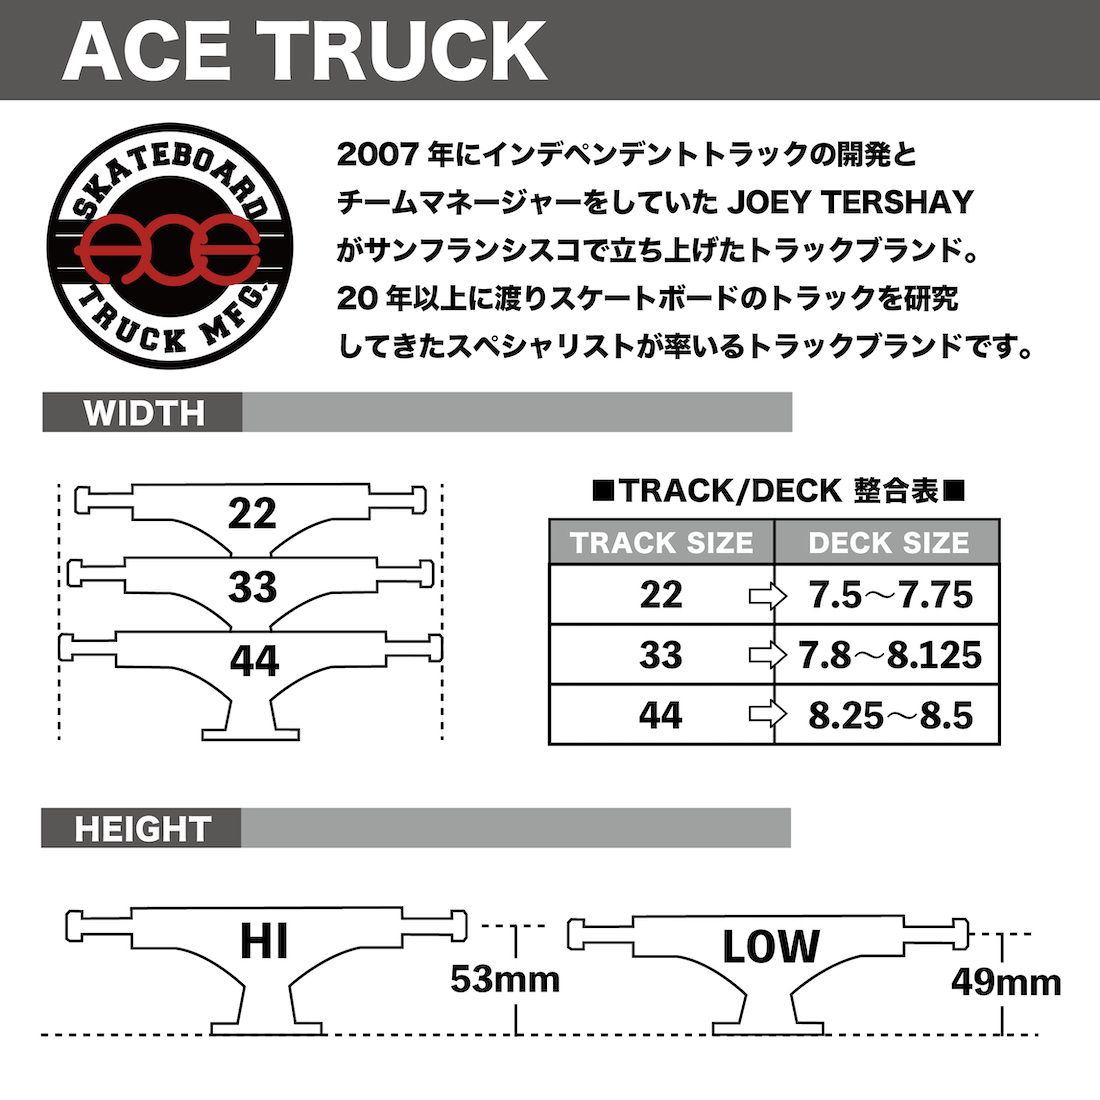 【Ace Truck】 Standard - 44 (149) "Black"